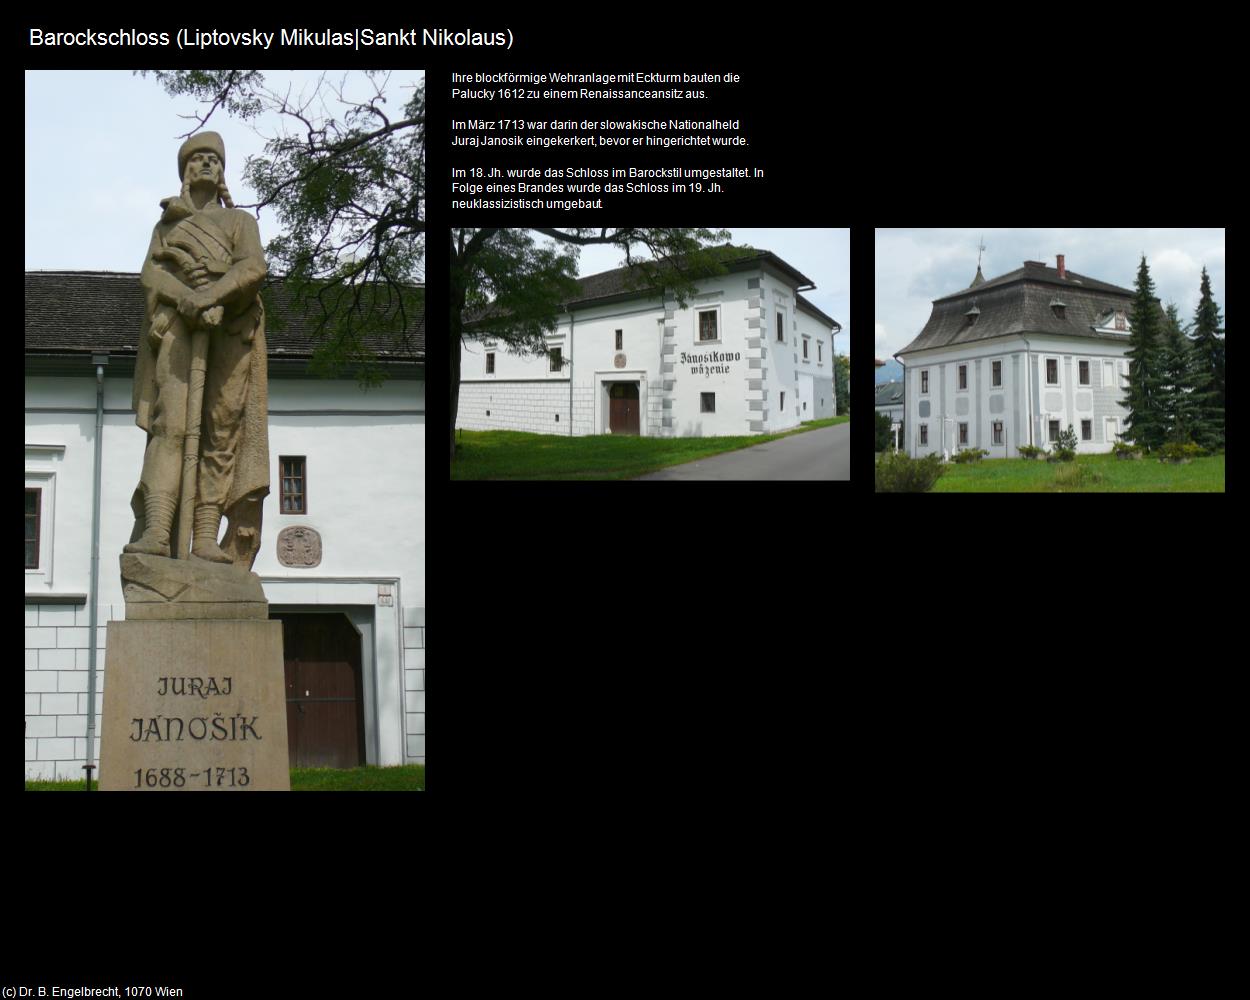 Barockschloss (Paludzka) (Liptovsky Mikulas|Sankt Nikolaus) in SLOWAKEI